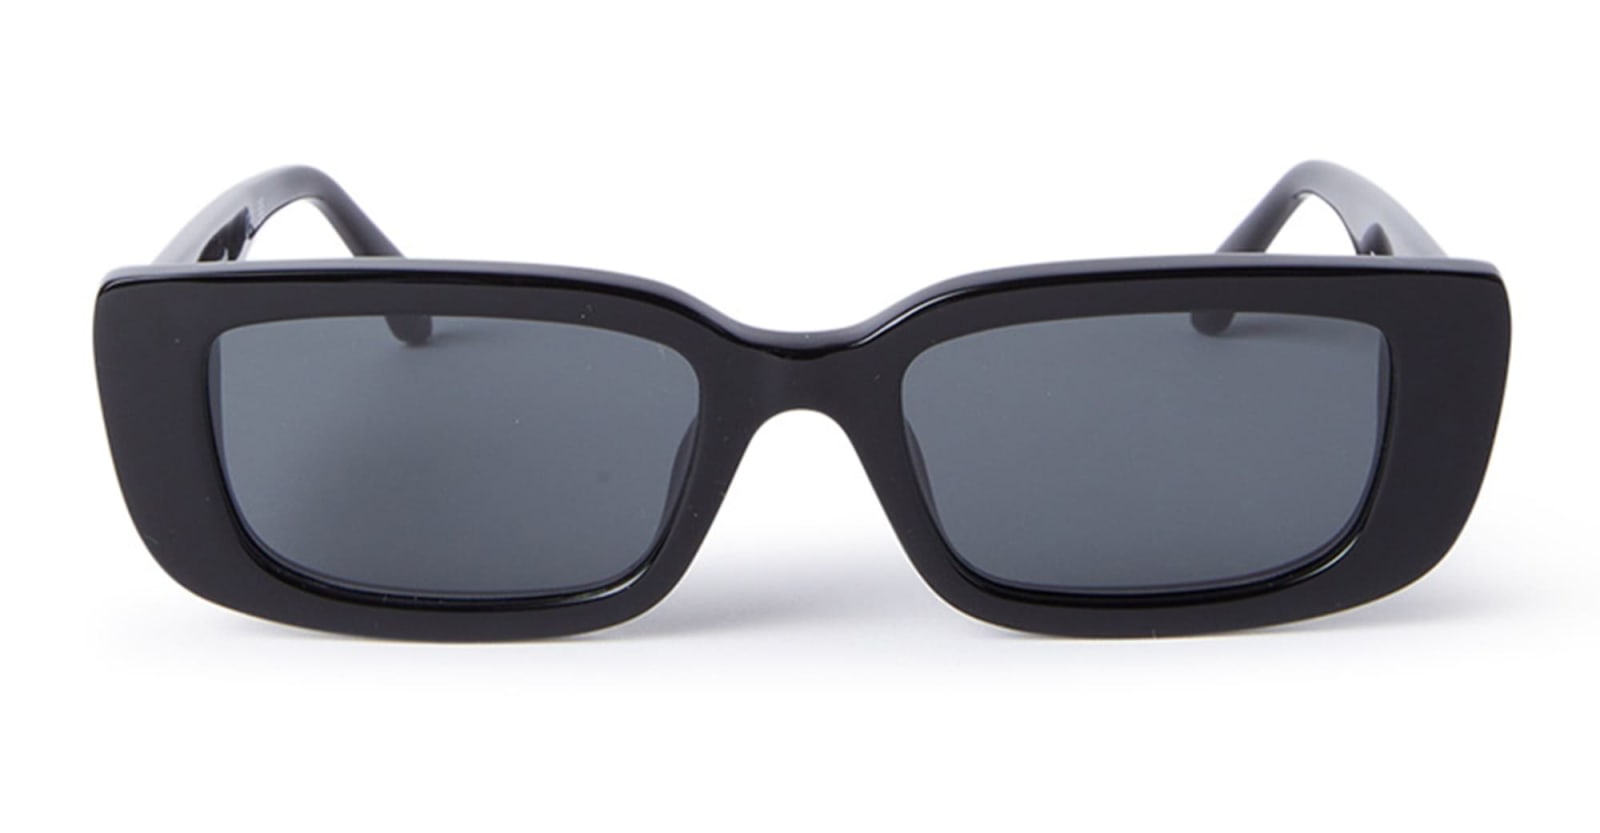 Yosemite - Black Sunglasses